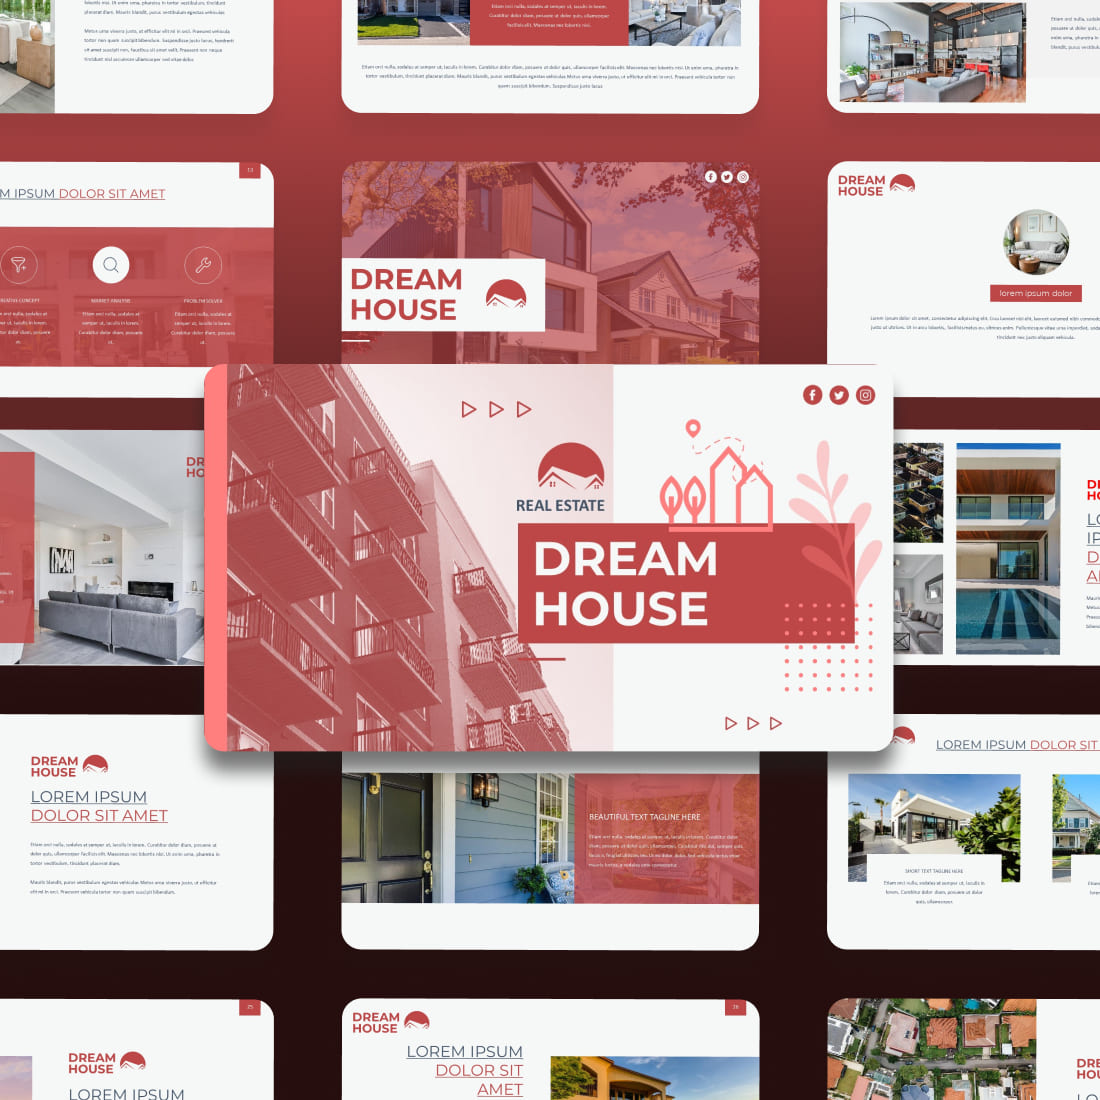 Dream House Google Slides Theme cover image.